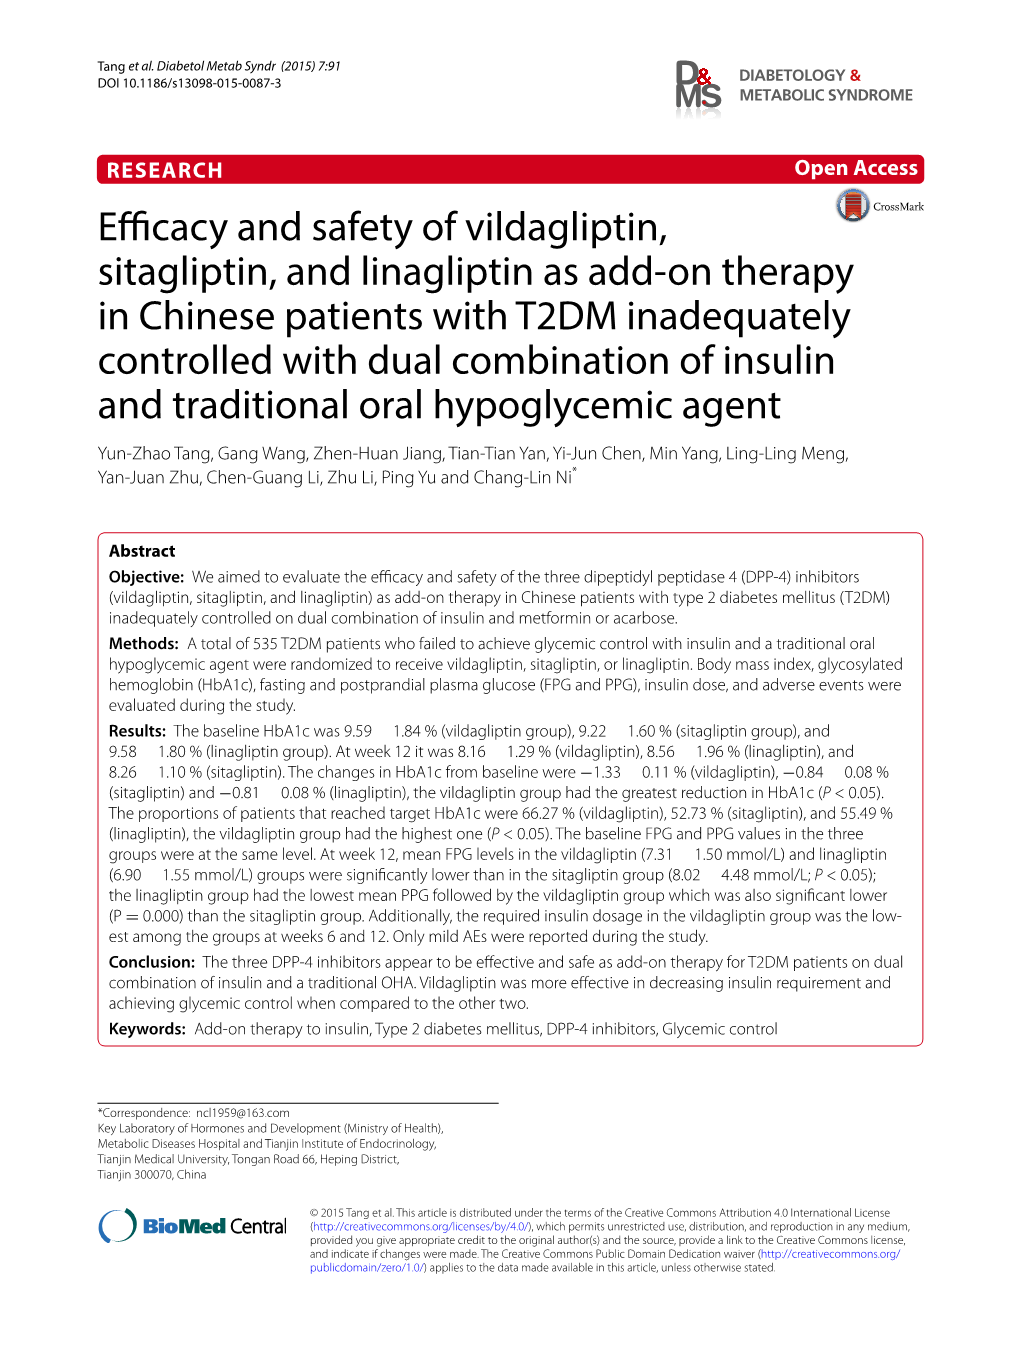 Efficacy and Safety of Vildagliptin, Sitagliptin, and Linagliptin As Add-On